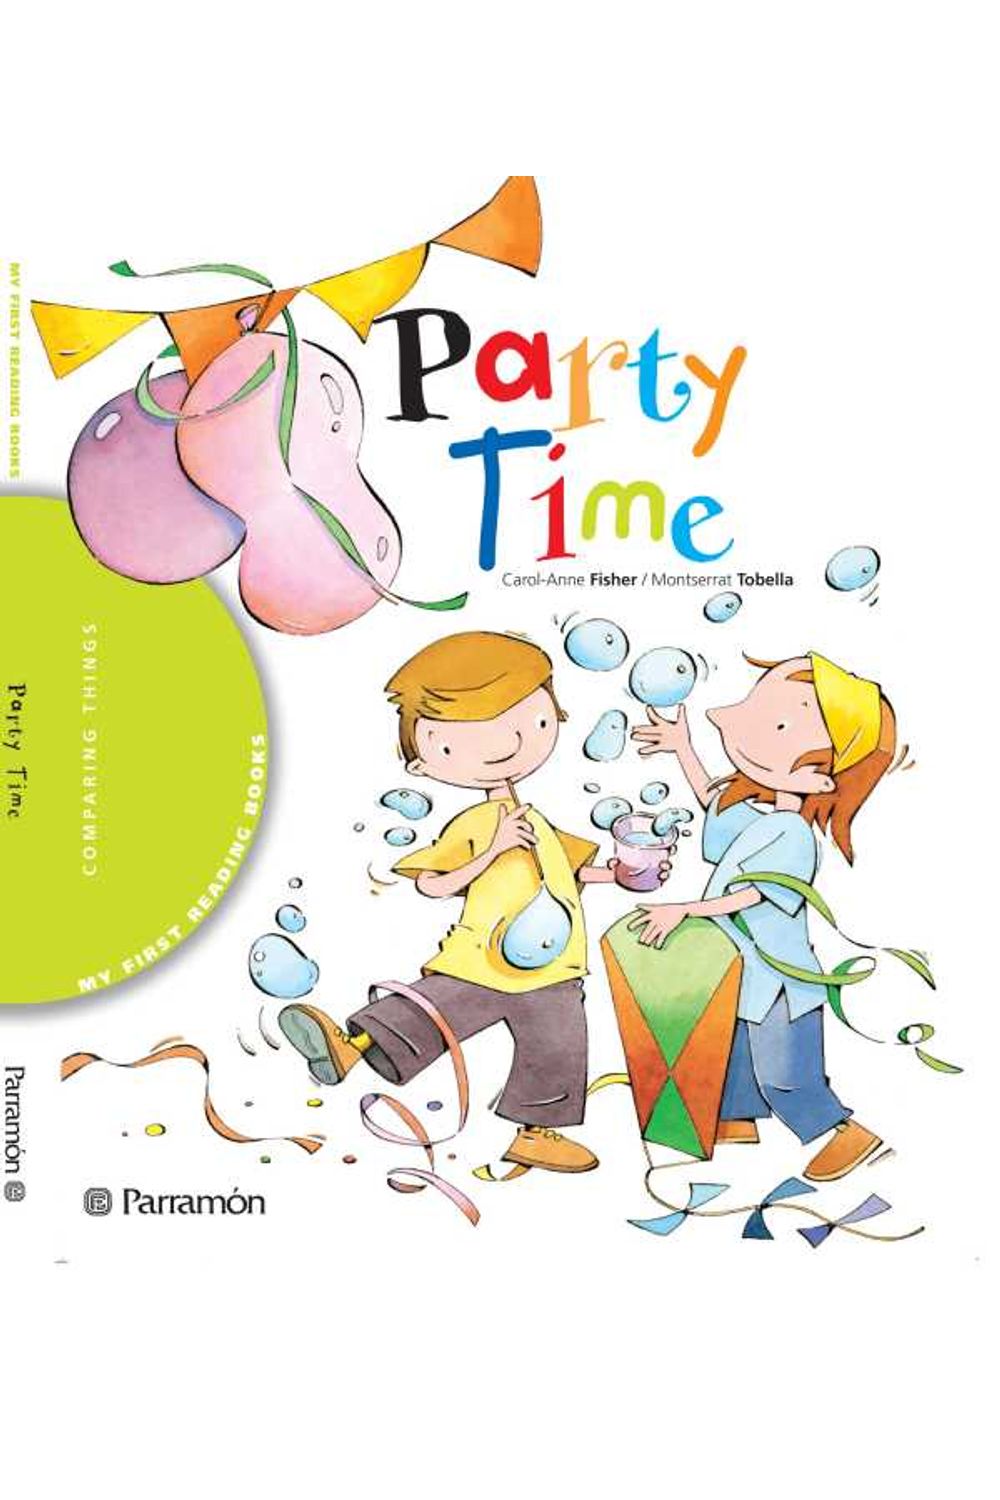 bw-party-time-parramn-paidotribo-9788499103990